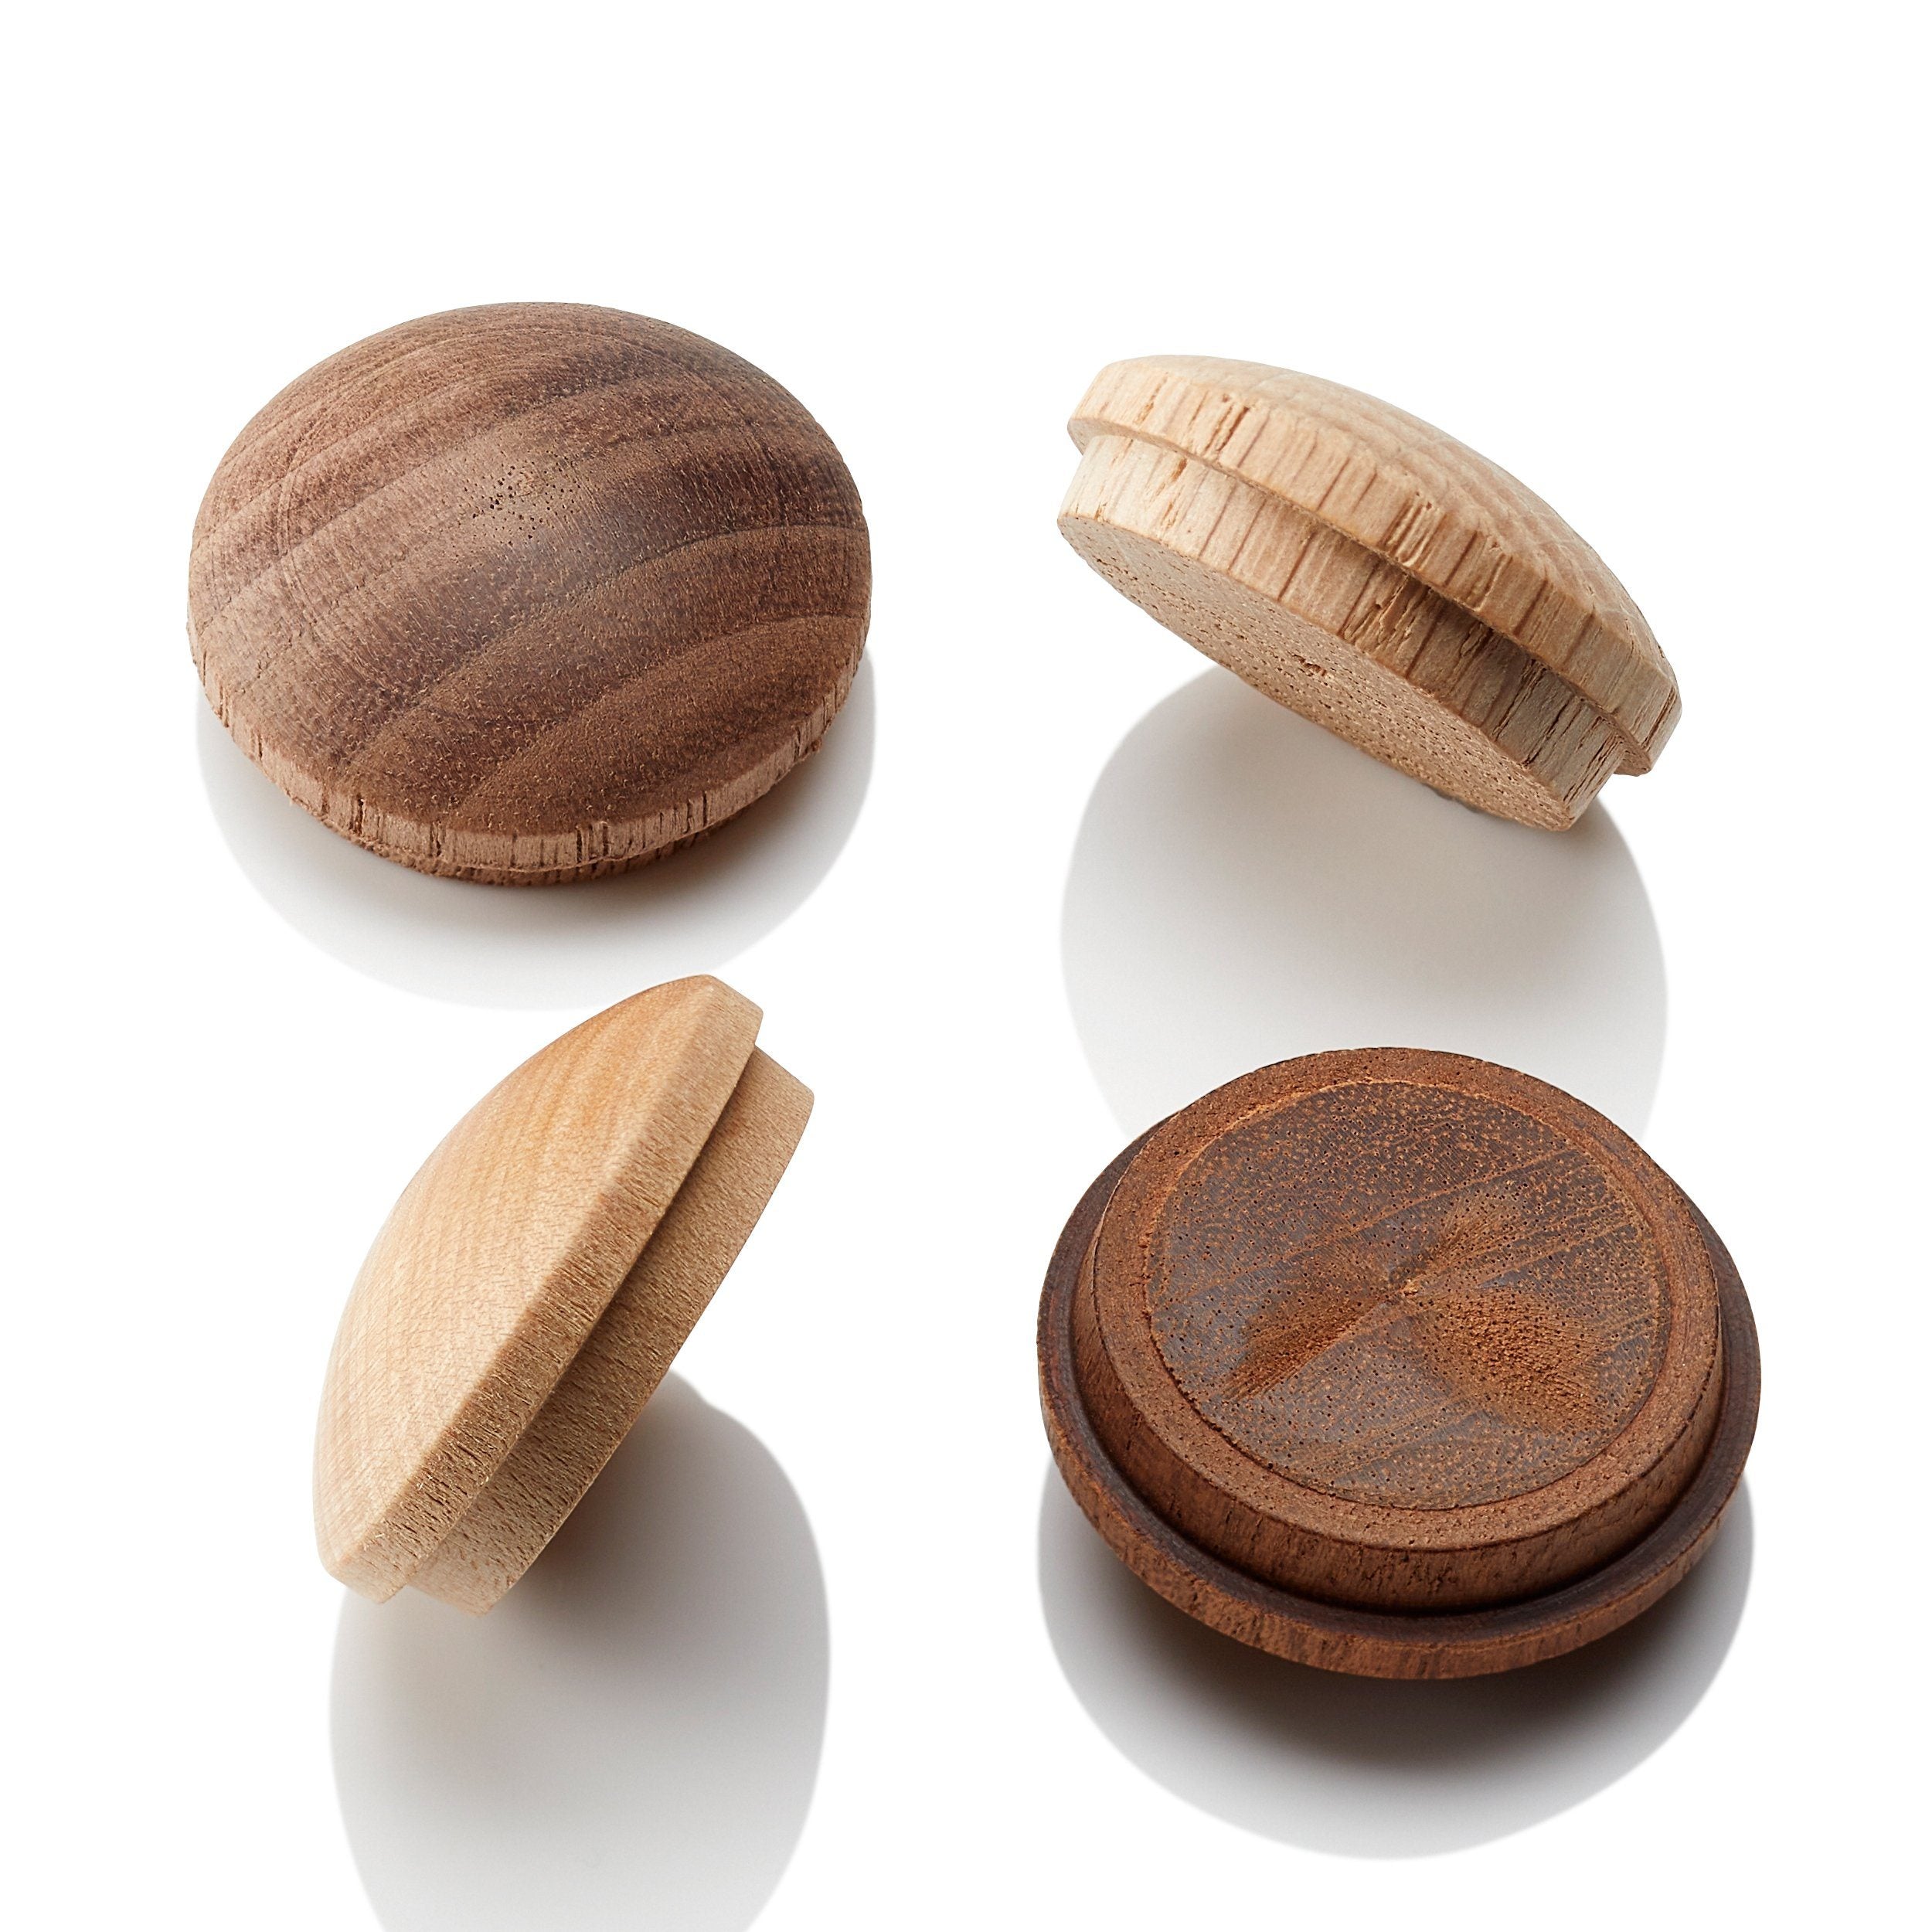 7/16 Button Top Wood Plugs - Maple, Oak, Walnut, Cherry & Mahogany